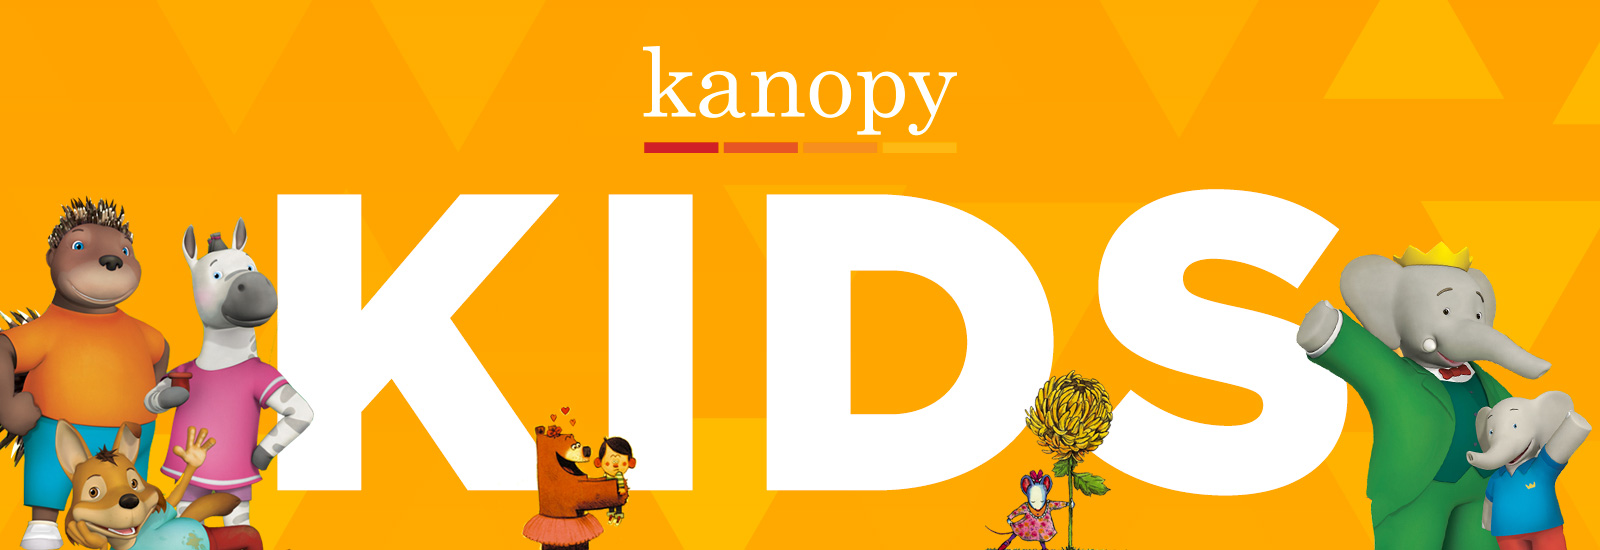 Kanopy Kids Image